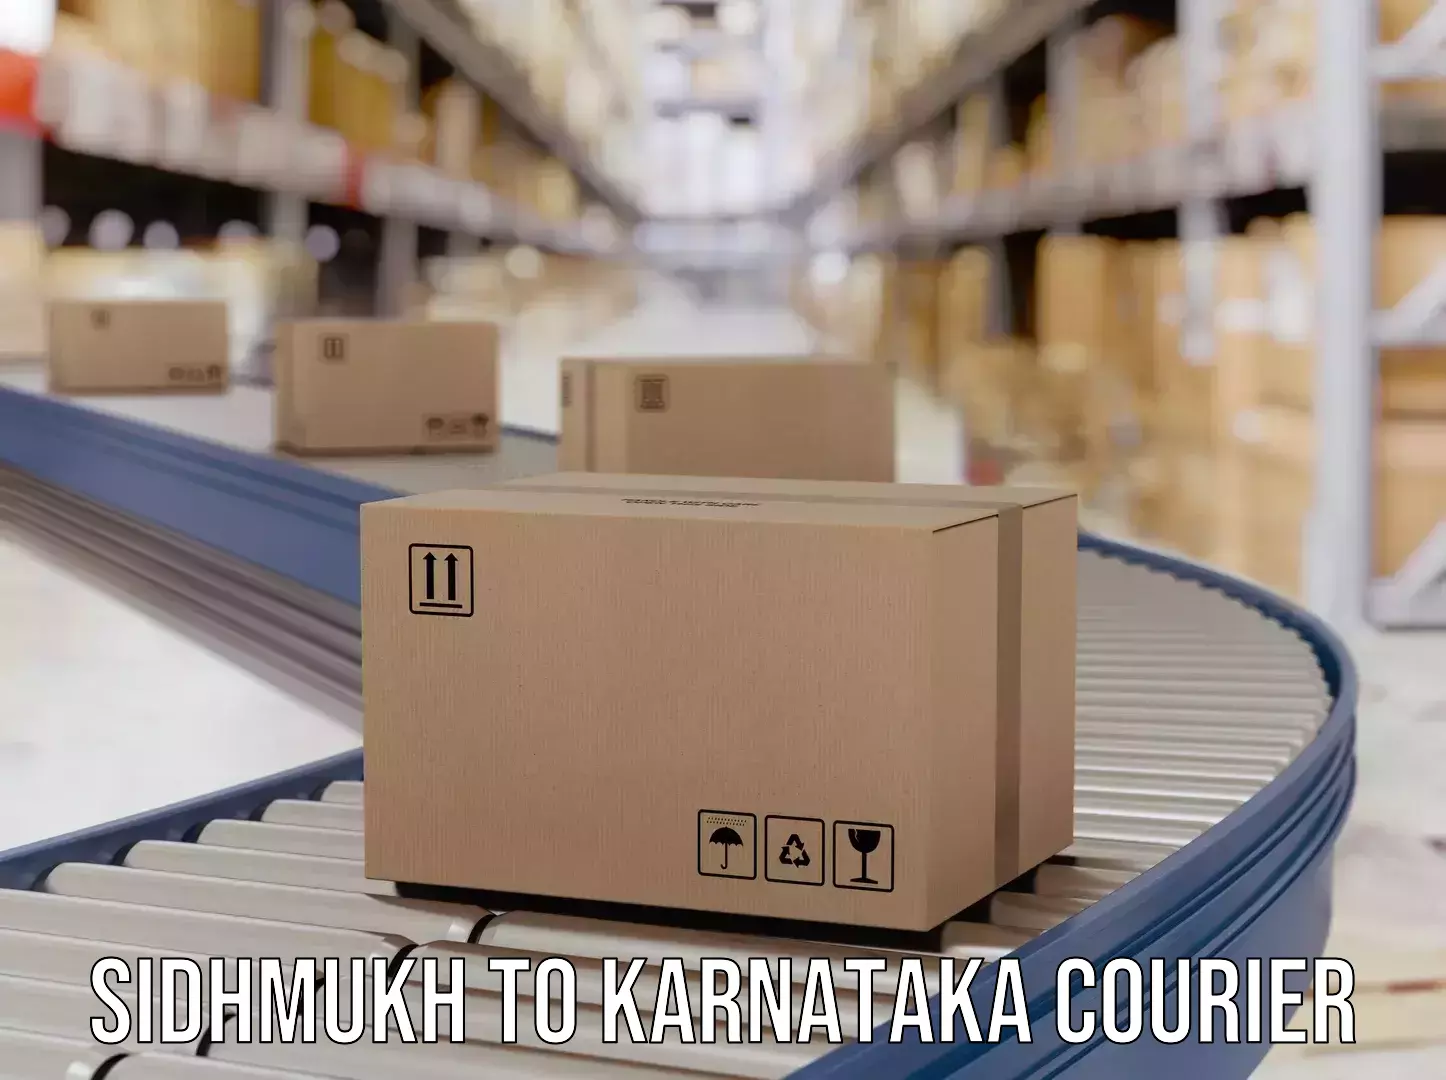 Speedy delivery service Sidhmukh to Karnataka